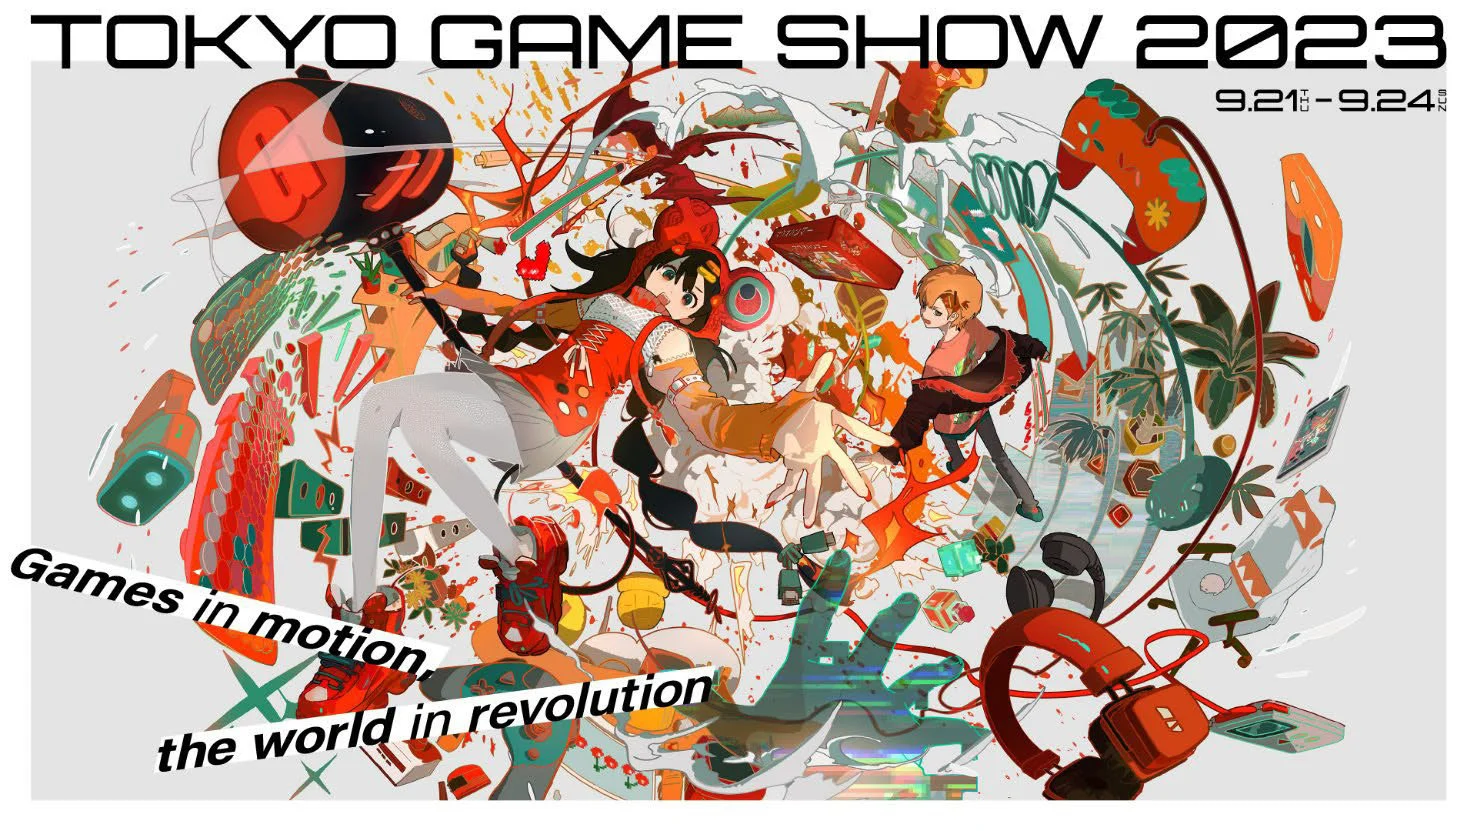 Представлен красочный арт выставки Tokyo Game Show 2023 от художника Kukka - фото 1